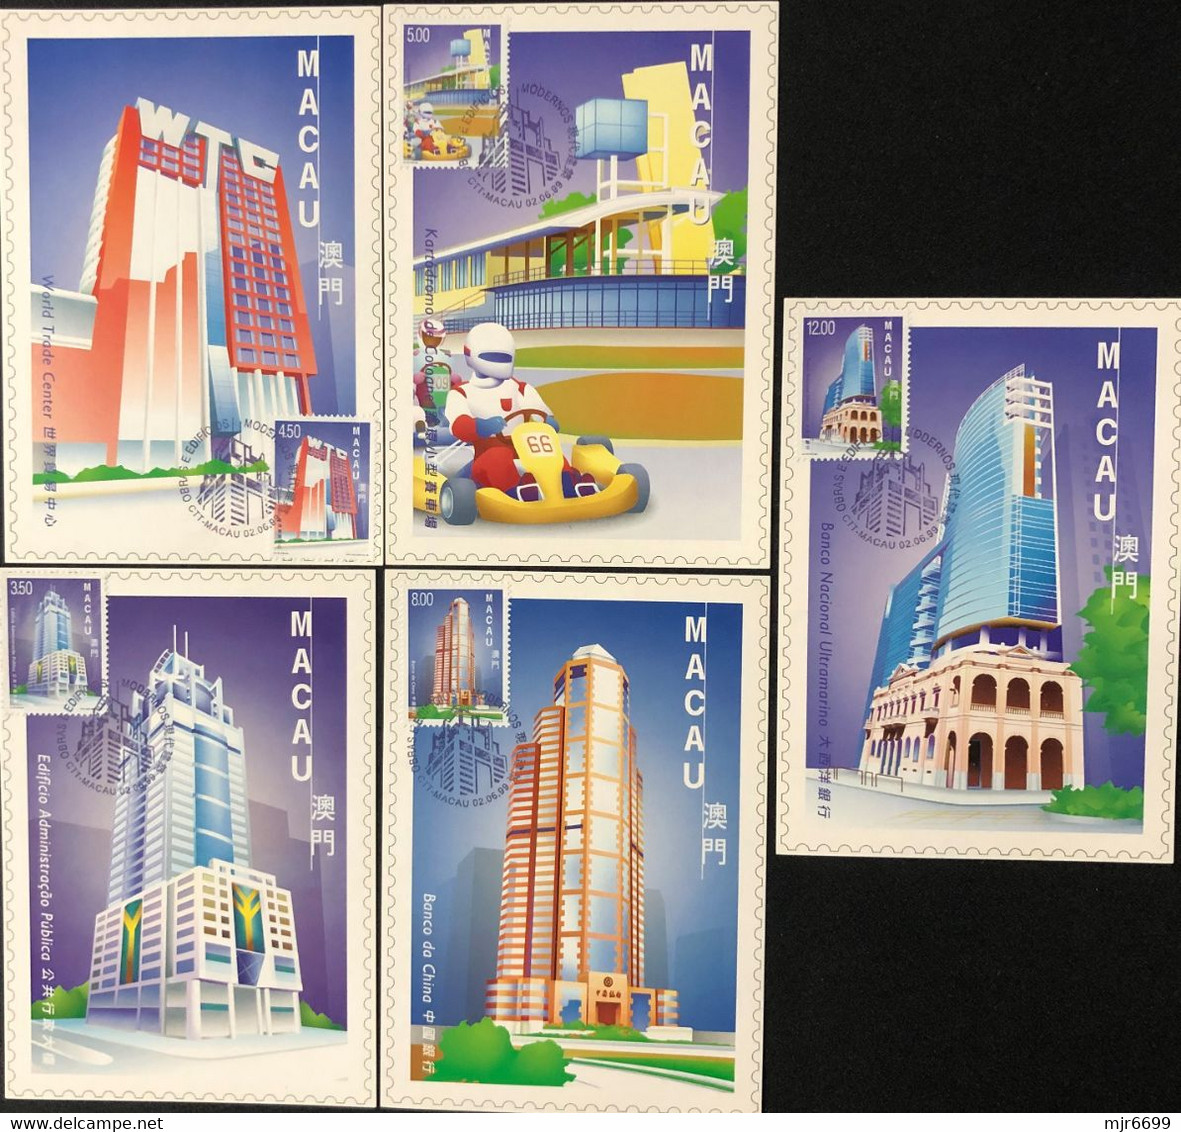 MACAU - 1996 MODERN BUILDINGS SET MAX CARDS OF 10 - Maximumkarten